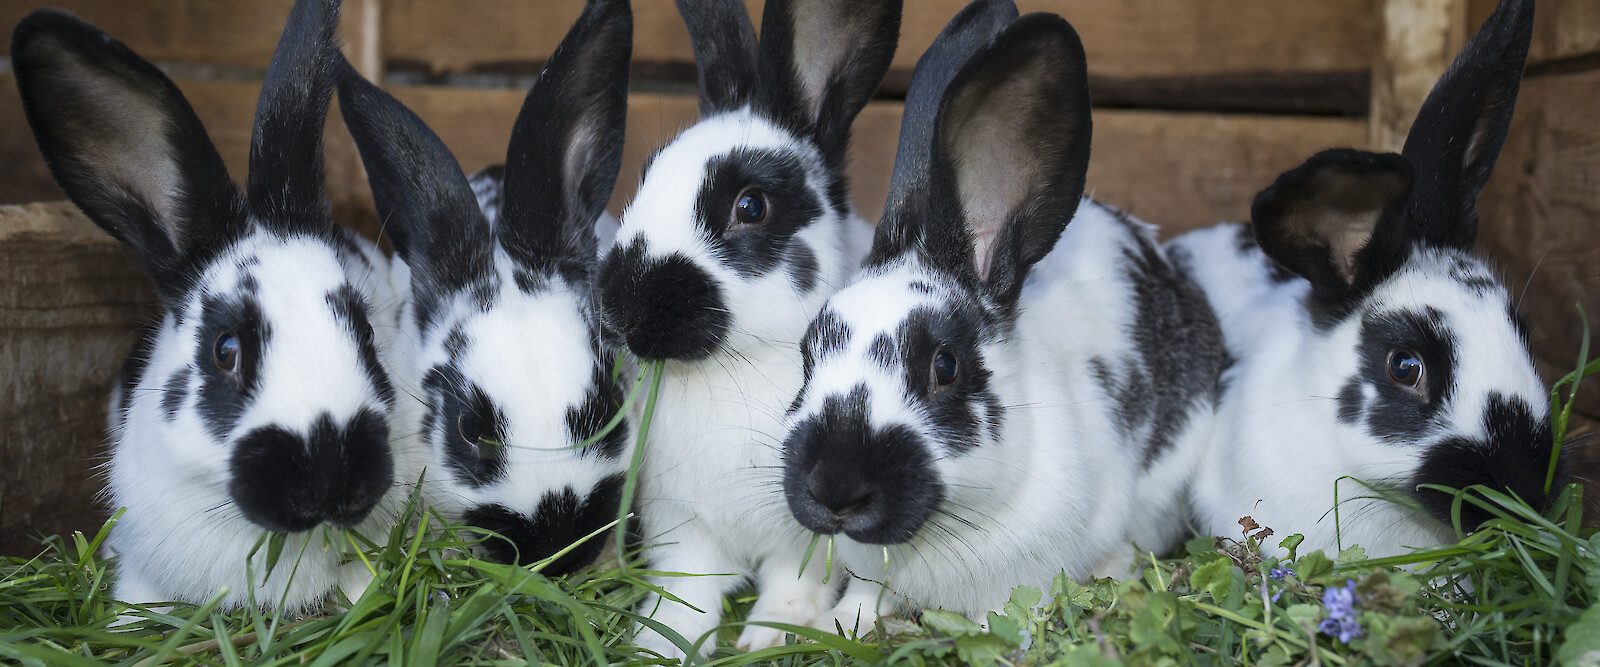 Pedigree rabbits eat grass in hutch